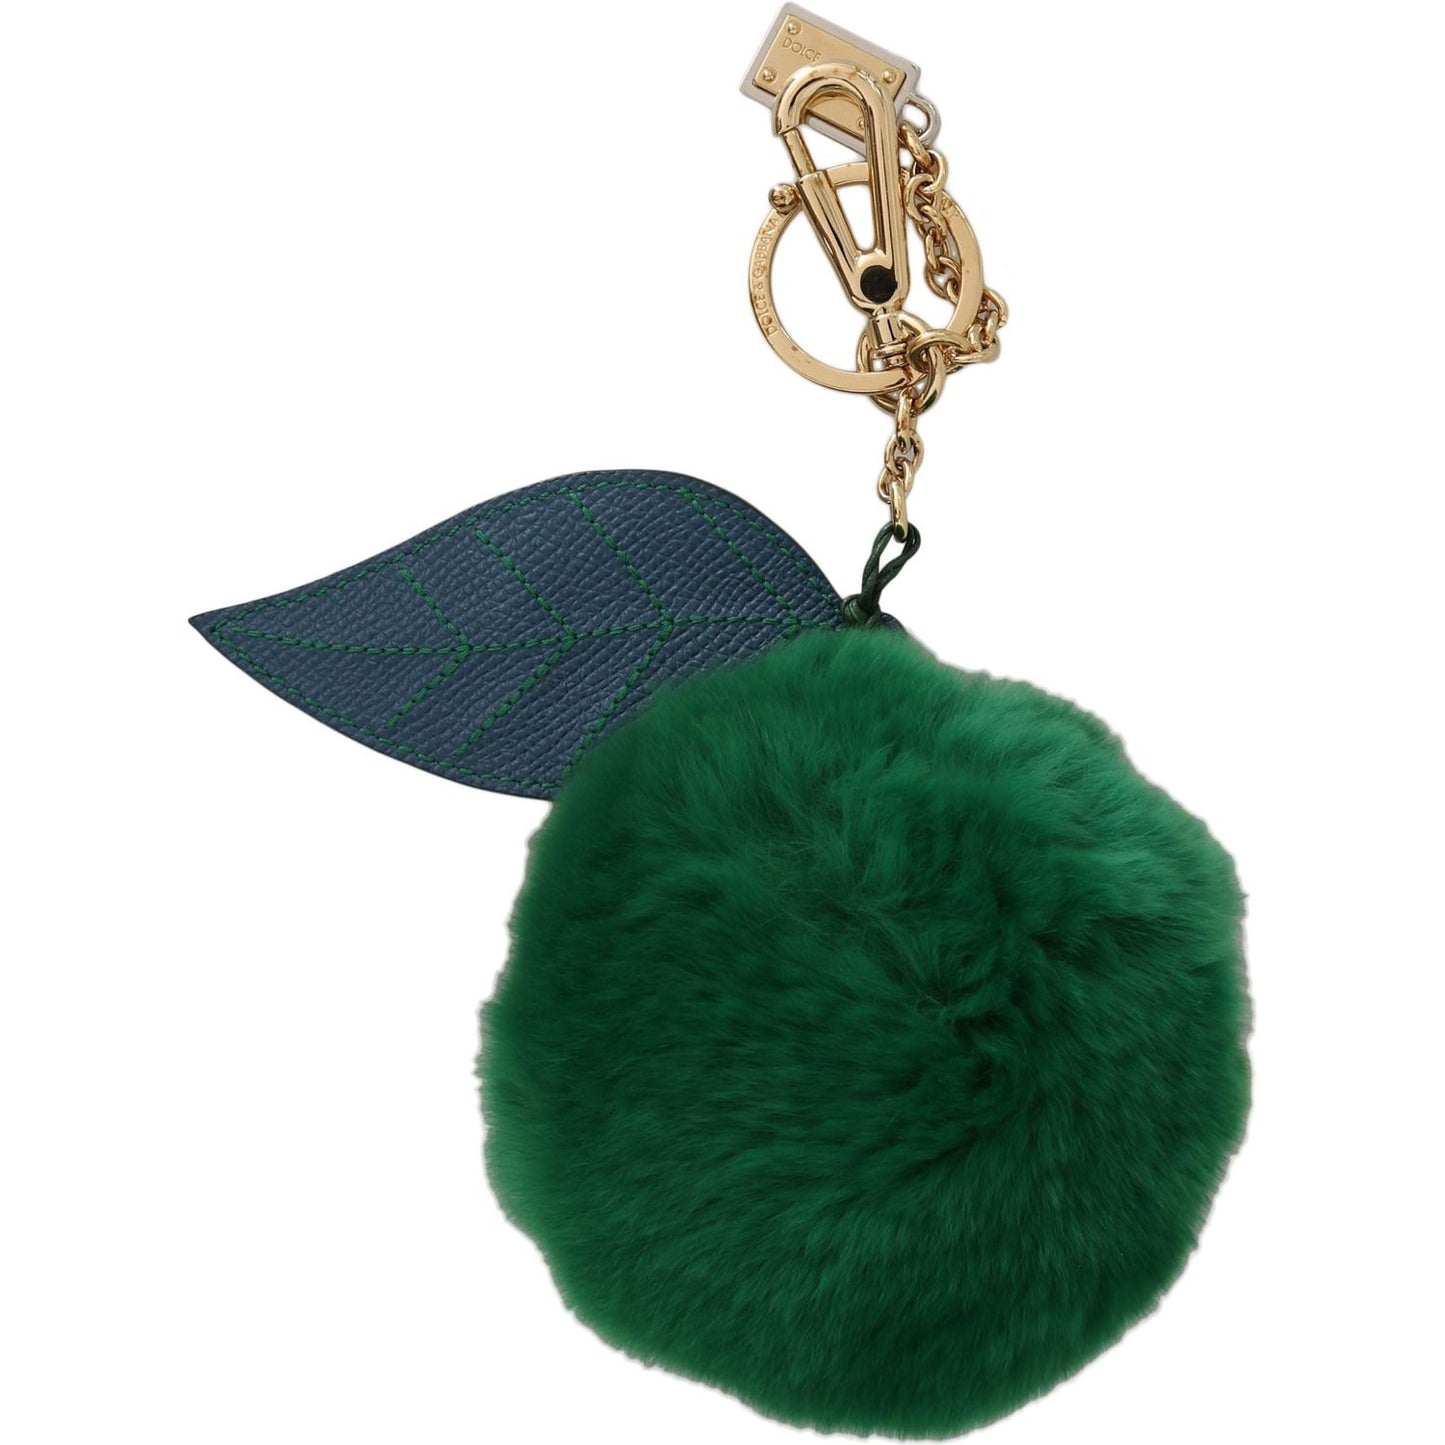 Dolce & Gabbana Elegant Tricolor Fur Ball Keychain Keychain green-leather-fur-gold-clasp-keyring-women-keychain IMG_1638-scaled-75650197-e73.jpg